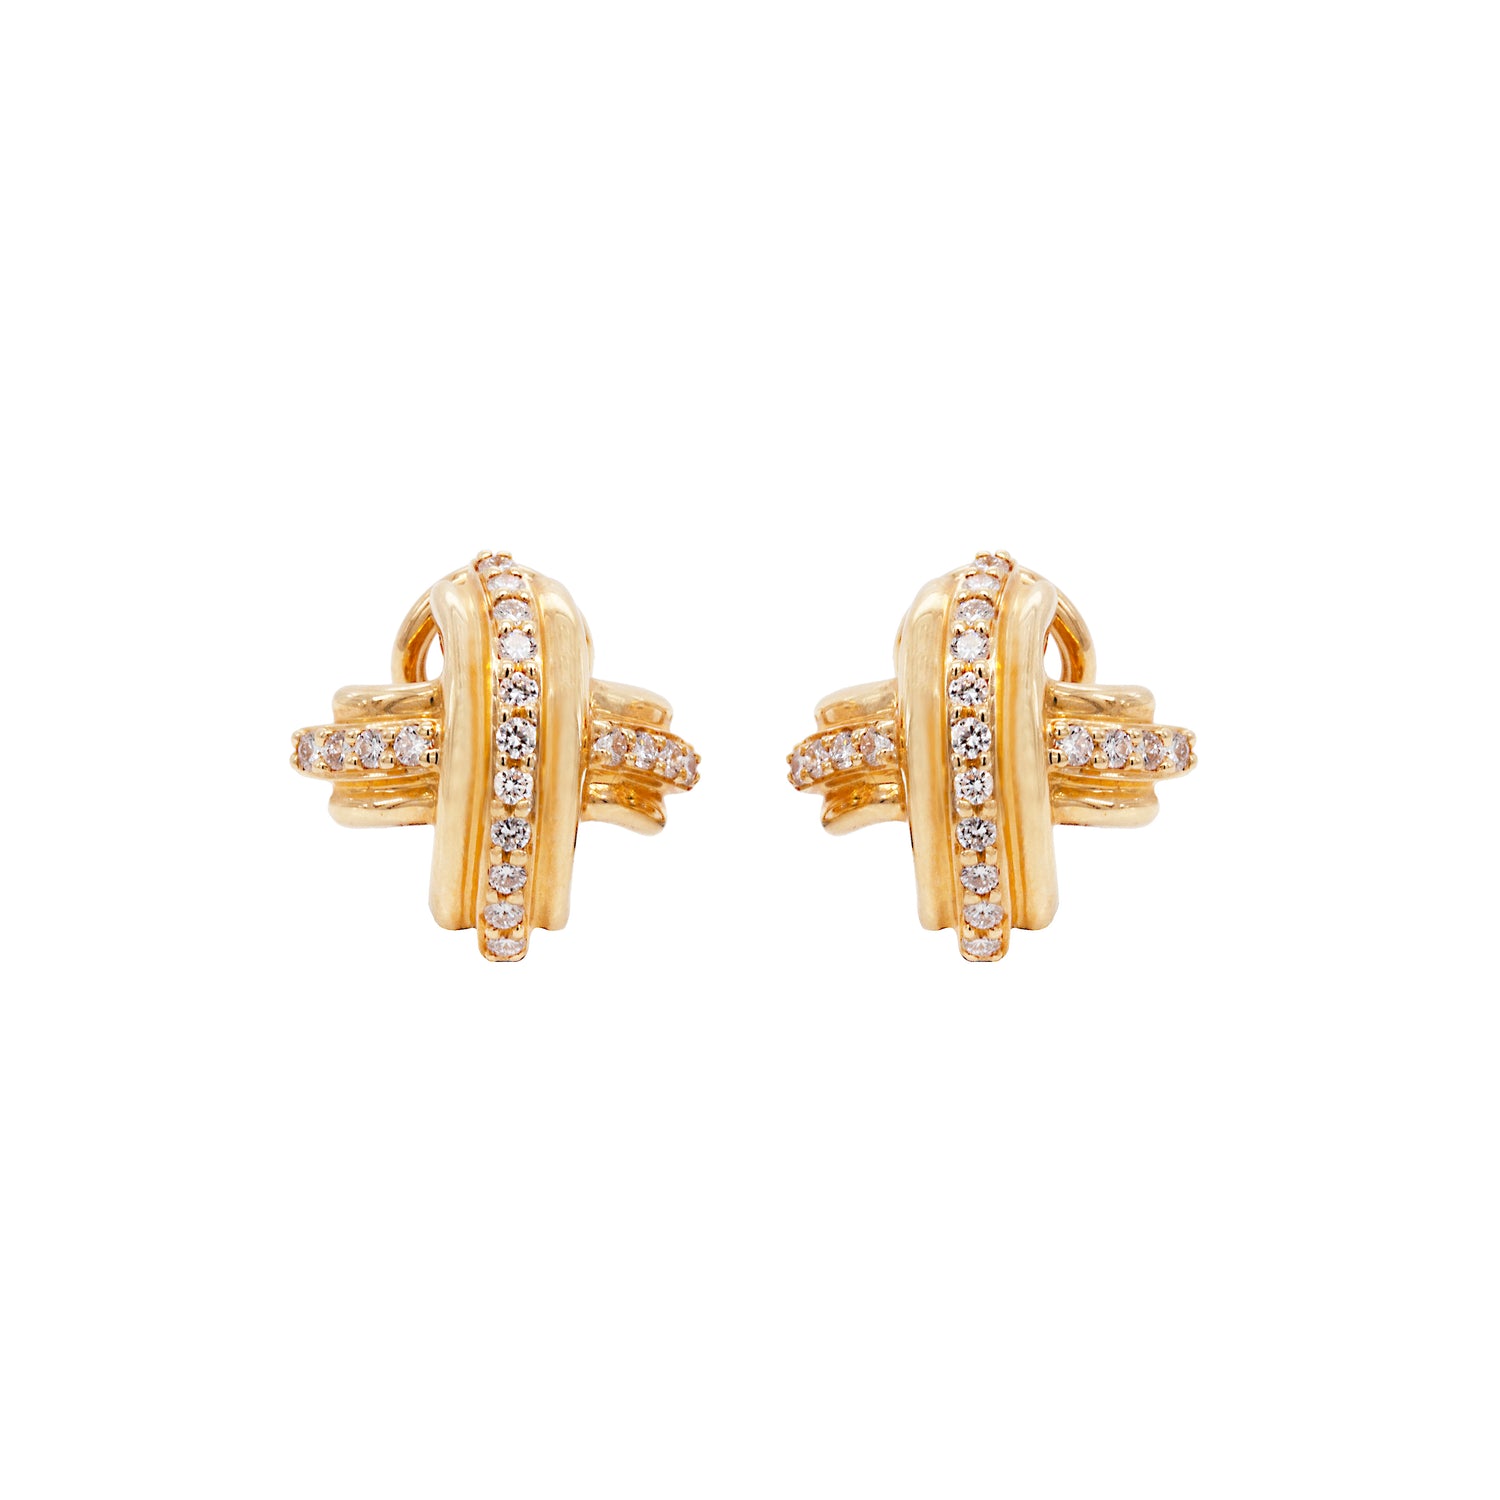 Tiffany & Co. 18ct Yellow Gold and Diamond 'Kiss' Earrings